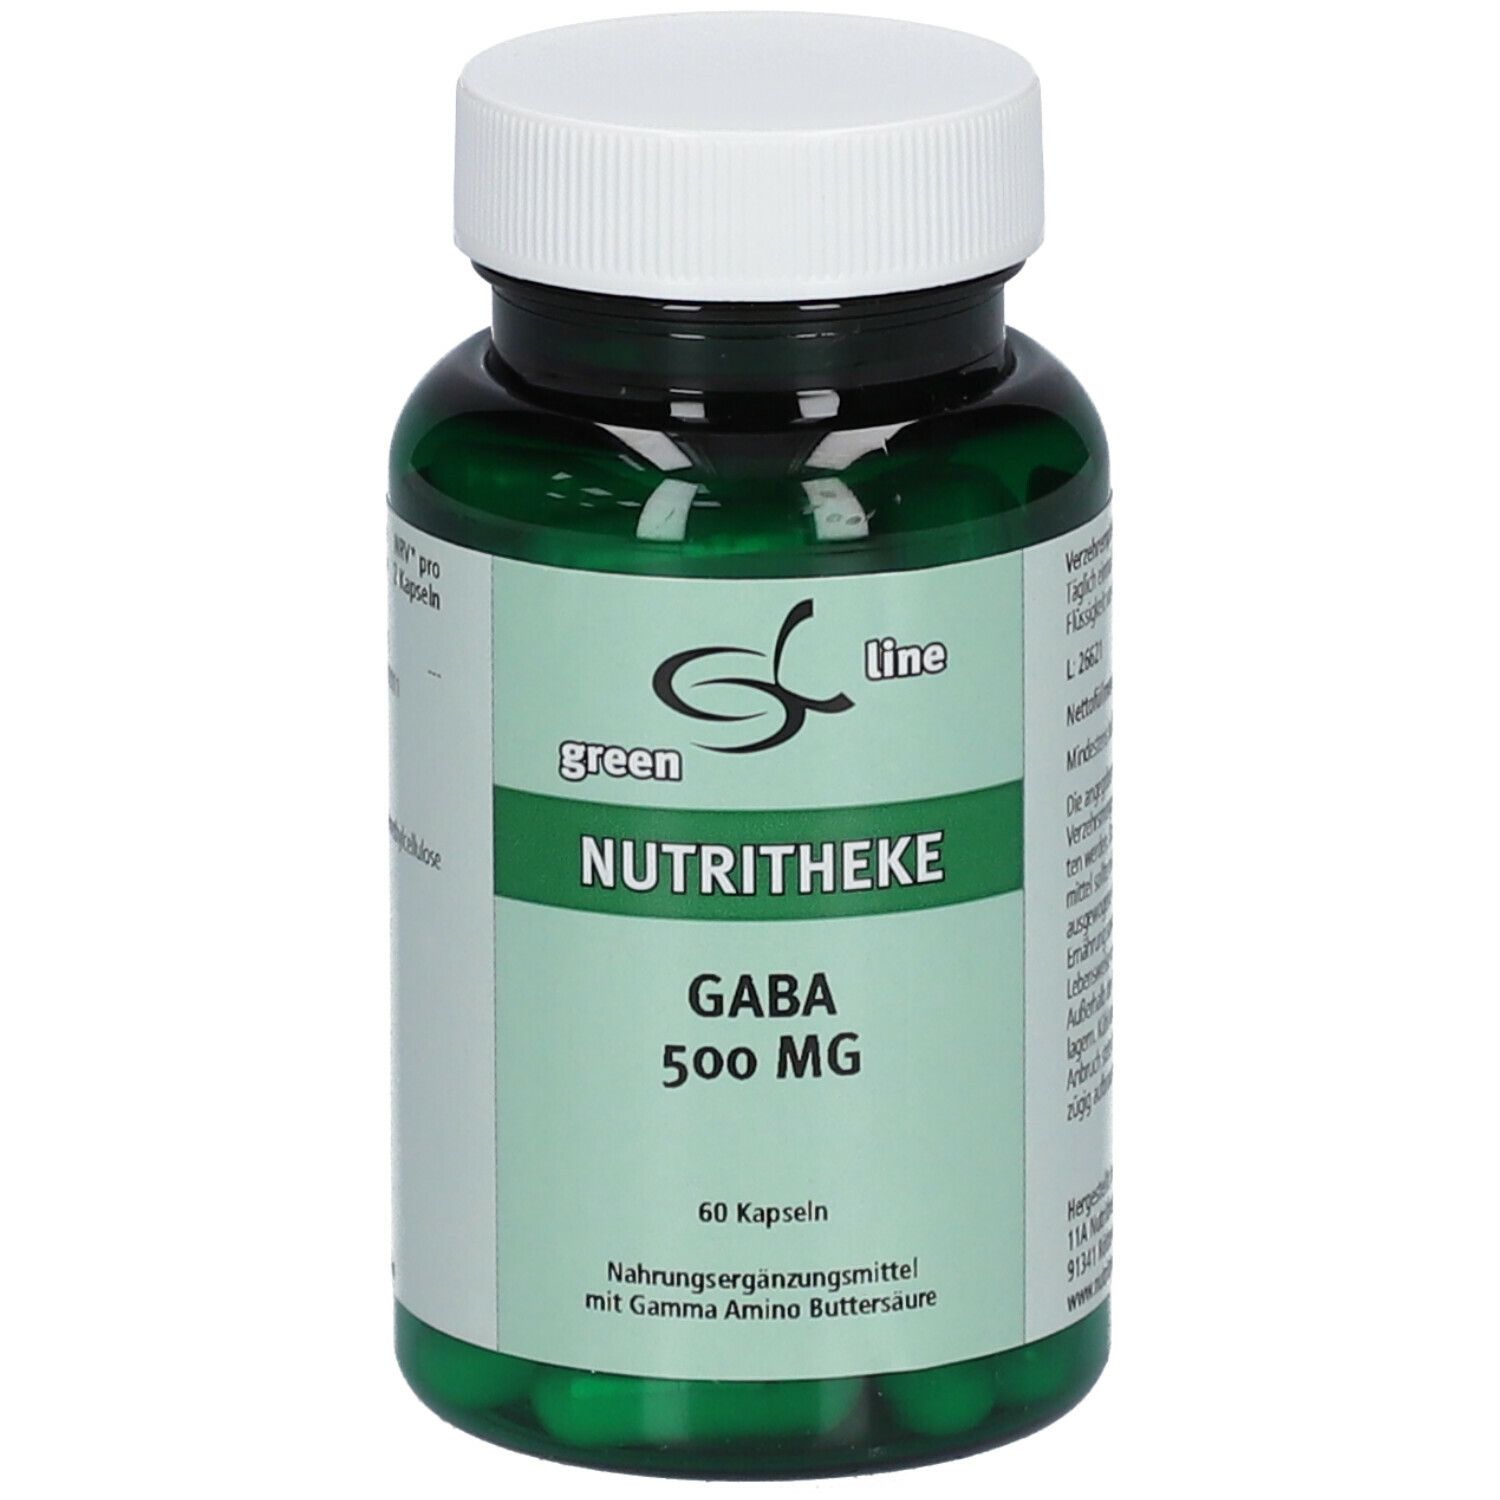 11 A Nutritheke GmbH green line Gaba 500 mg